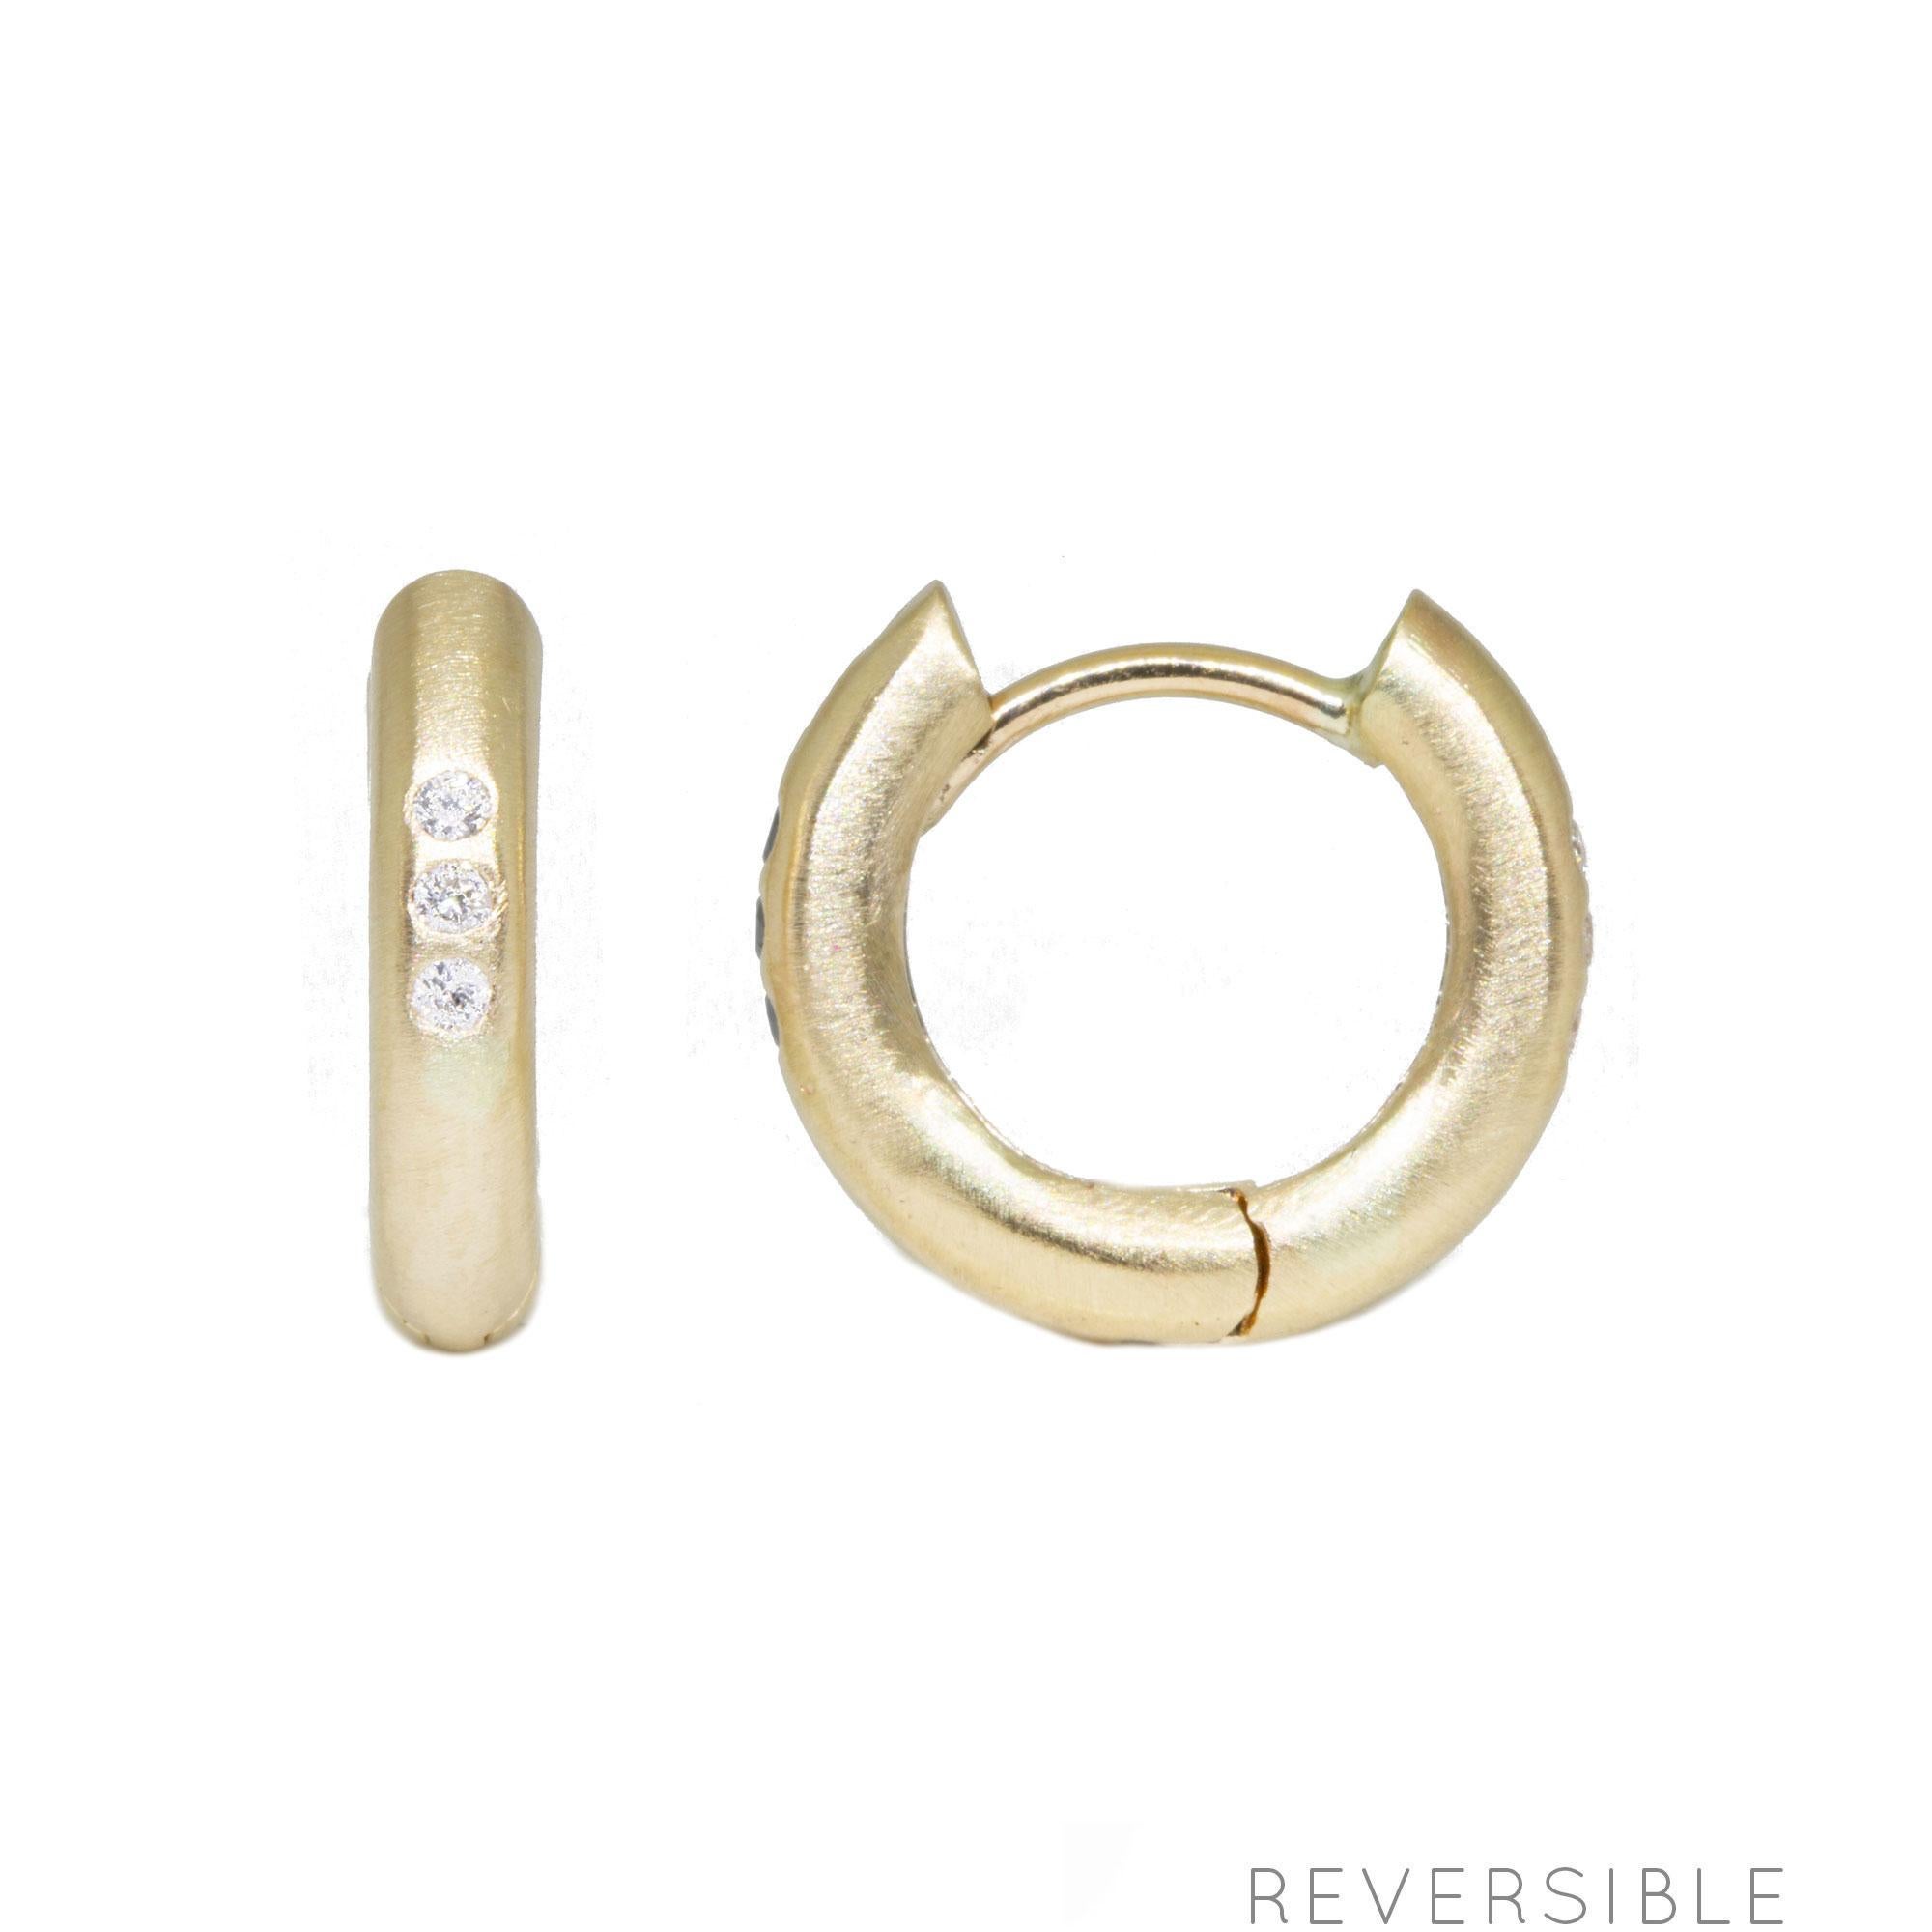 Metal: 14K Gold, 18K Gold
Diamond carat: 0.1
Size: 15mm
Diamond size: 1.5mm